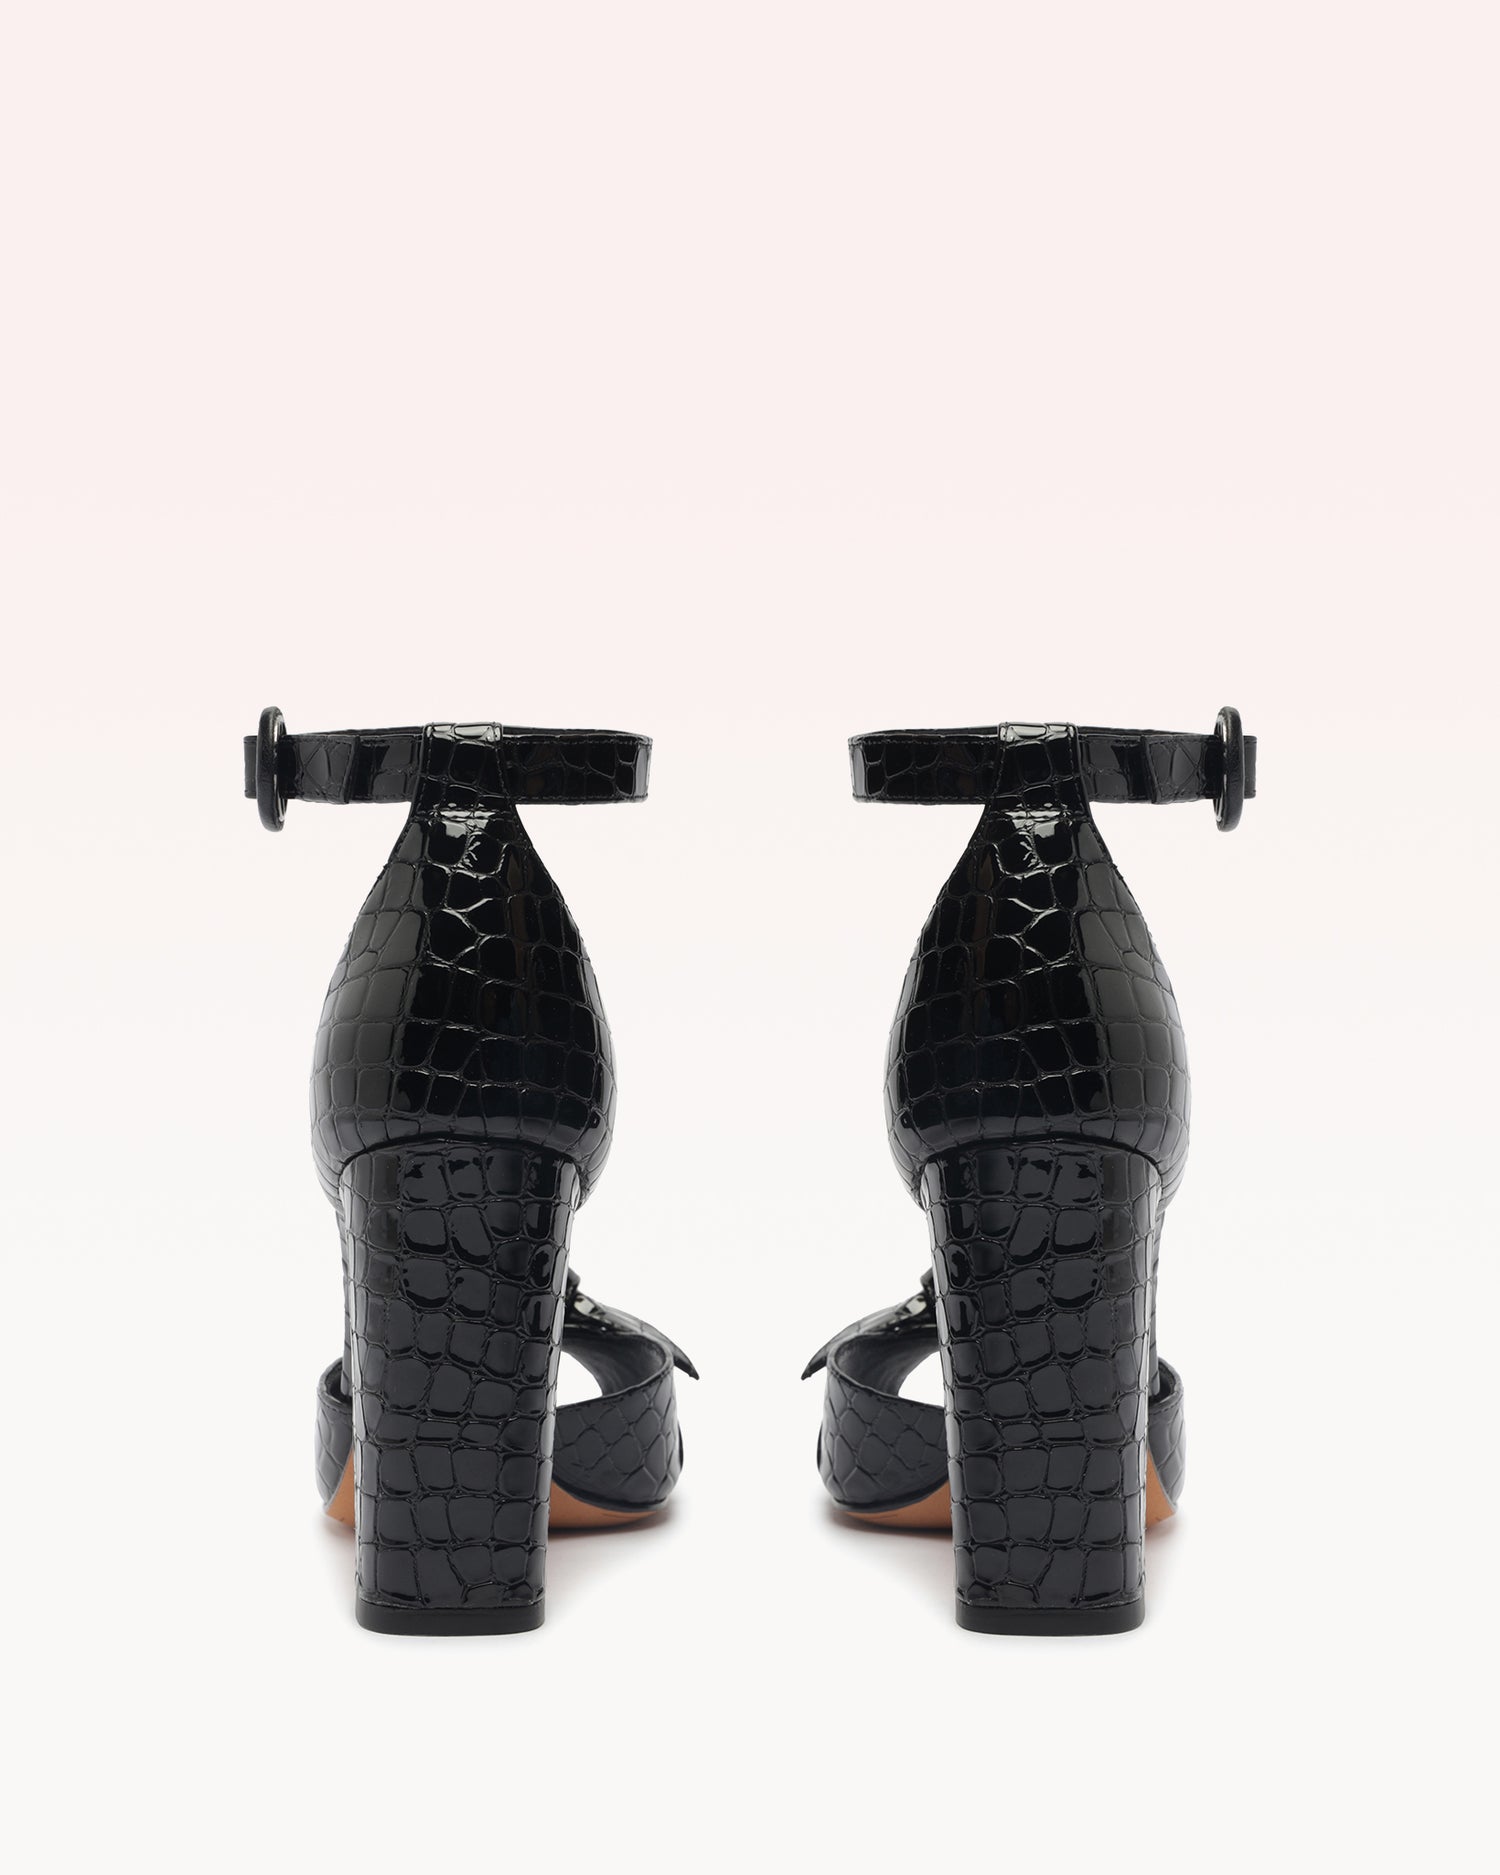 Pepitta 90 Crocco Black Sandals F/23   